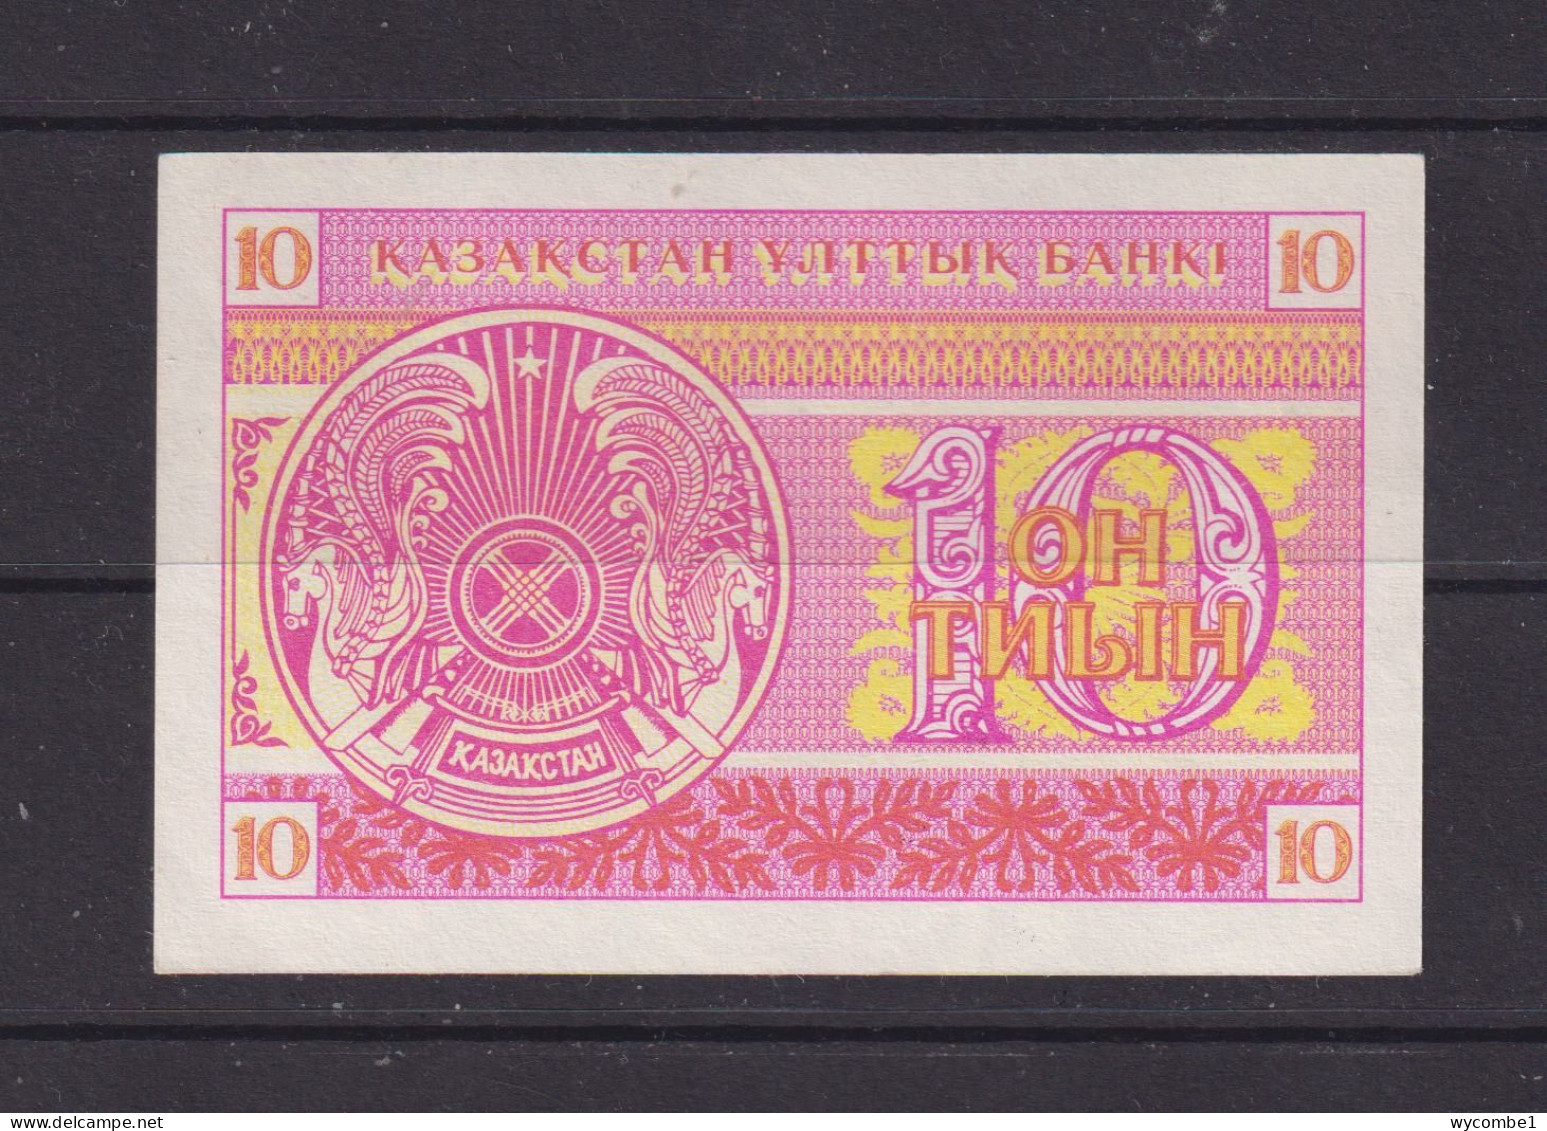 KAZAKHSTAN - 1993 10 Tyin UNC/aUNC Banknote - Kazakhstan